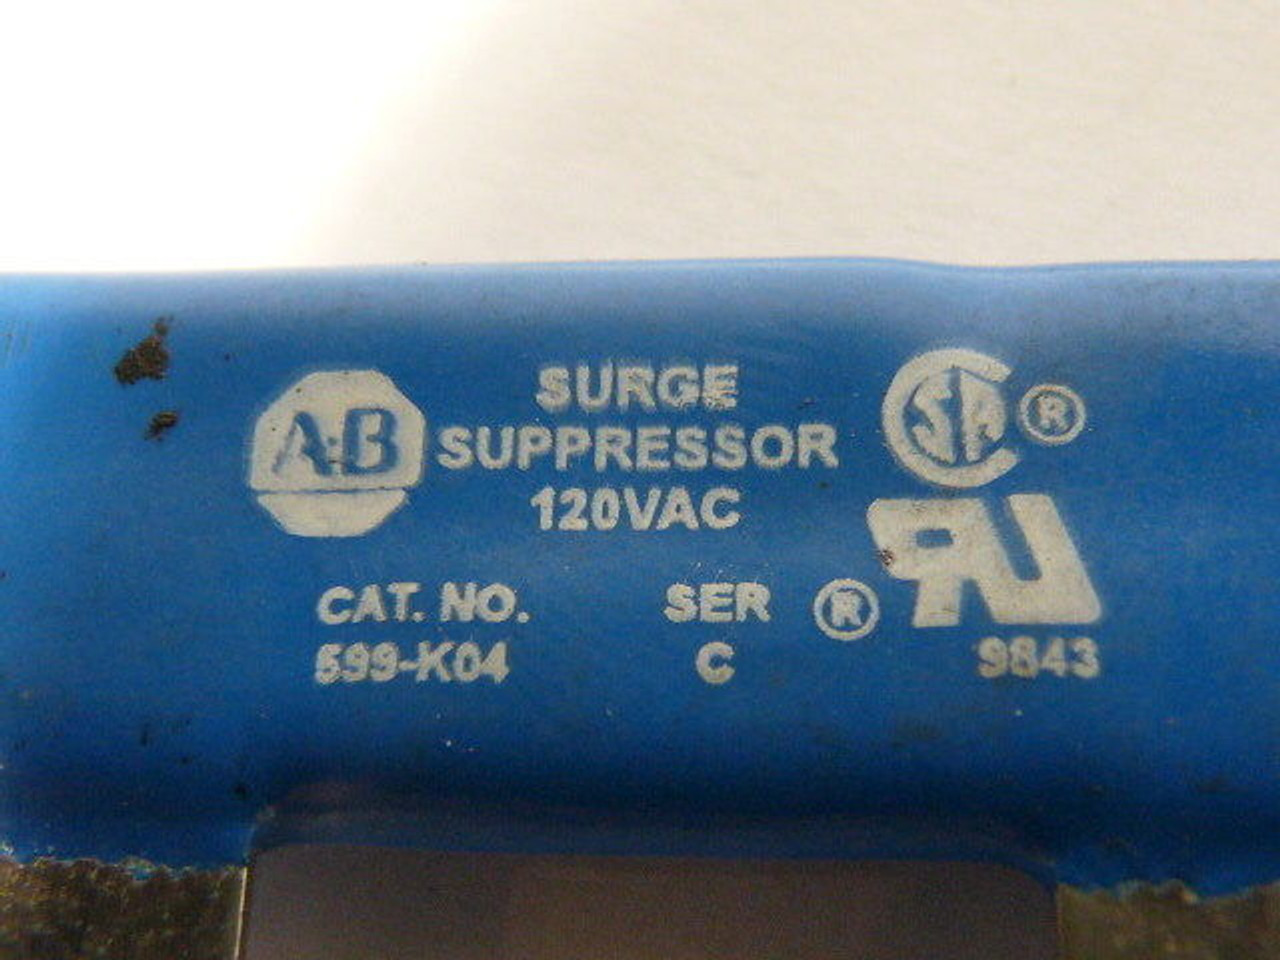 Allen-Bradley 599-K04 Surge Suppressor 12-120VAC Varistor USED